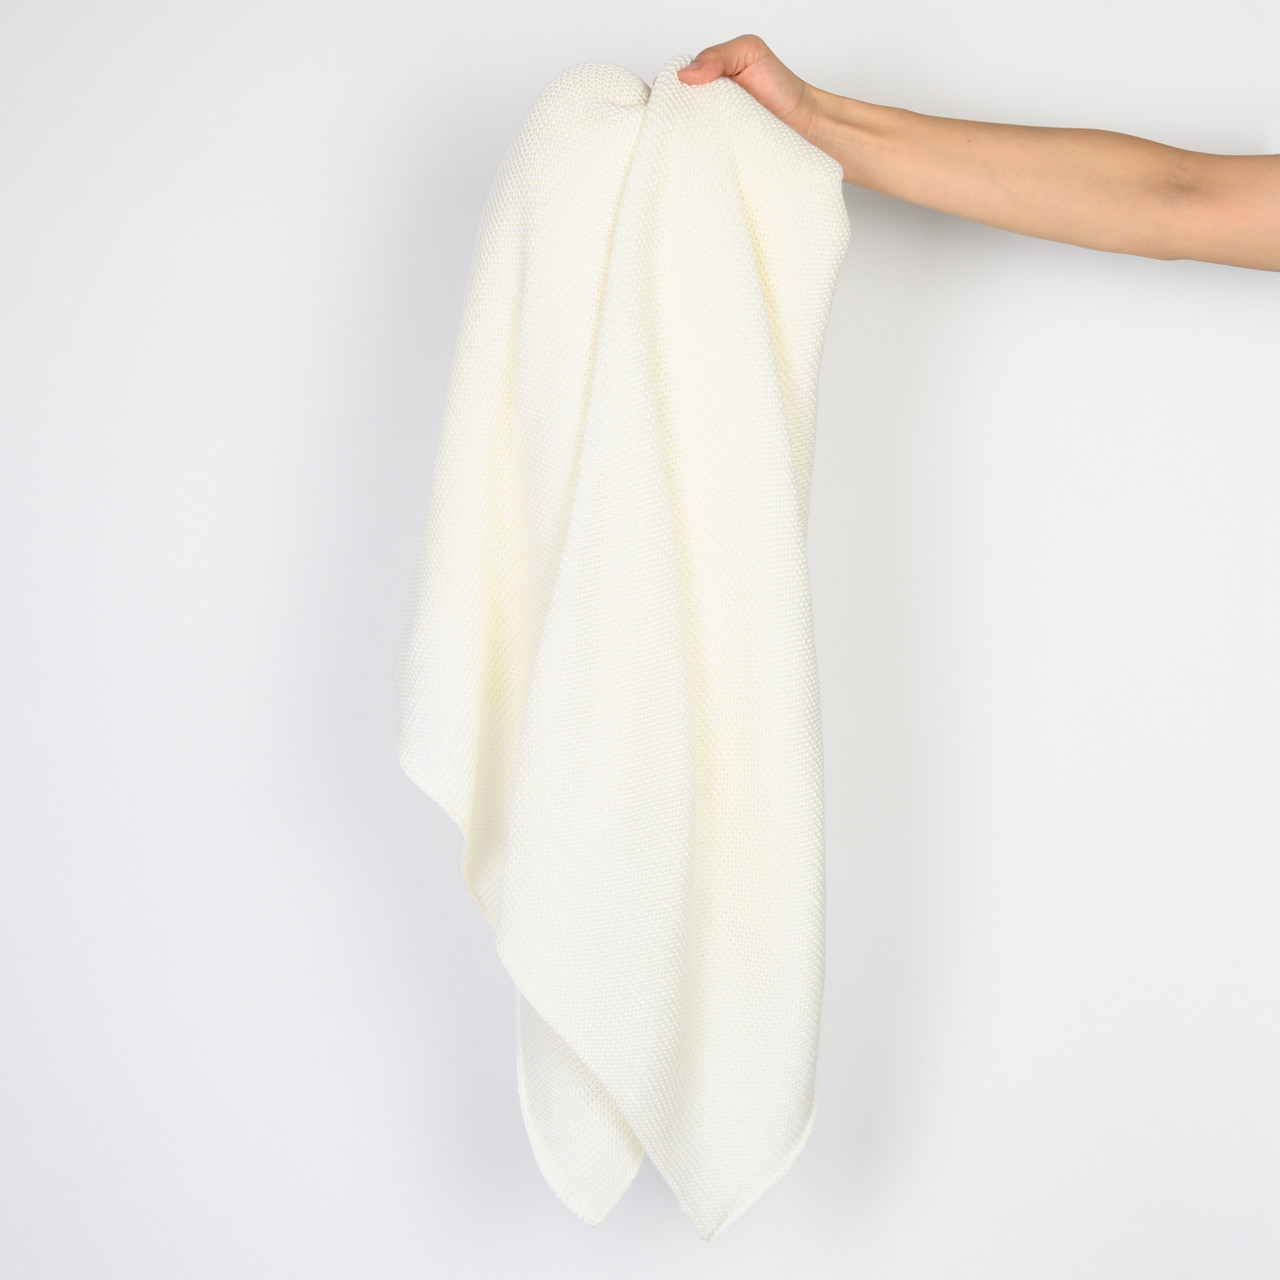 Iris Hantverk Towel